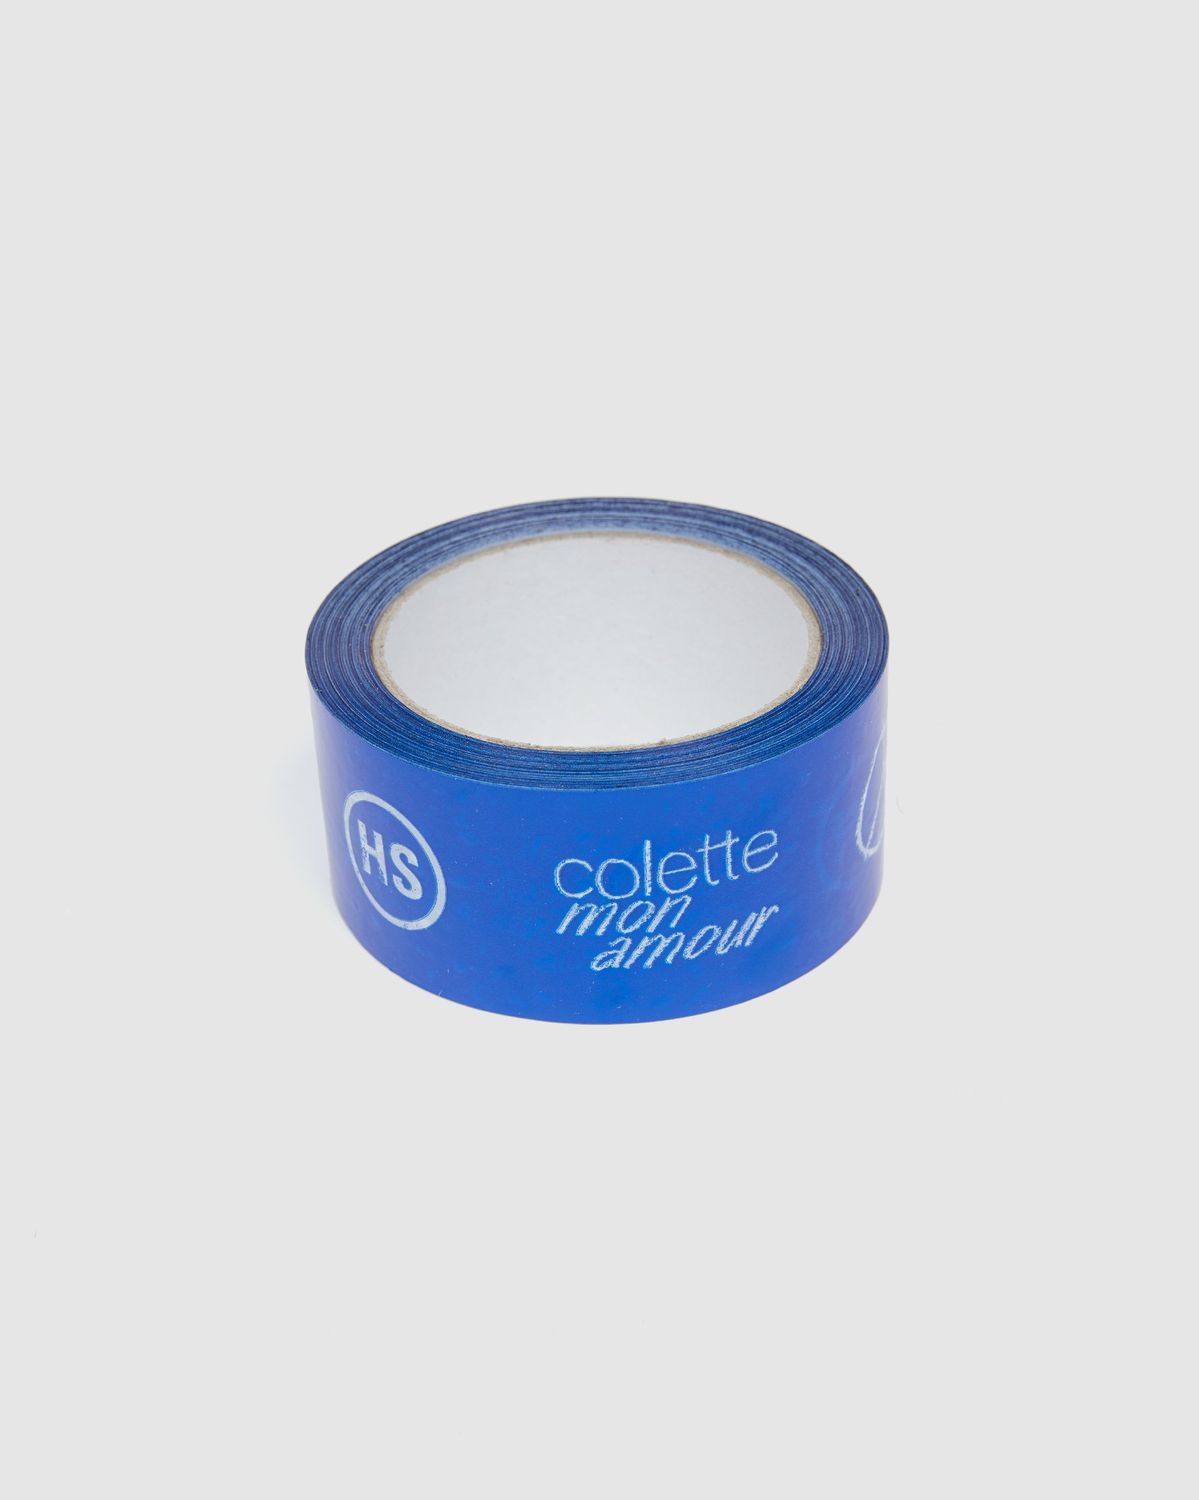 Colette Mon Amour – Blue Duct Tape - Stickers - Blue - Image 1